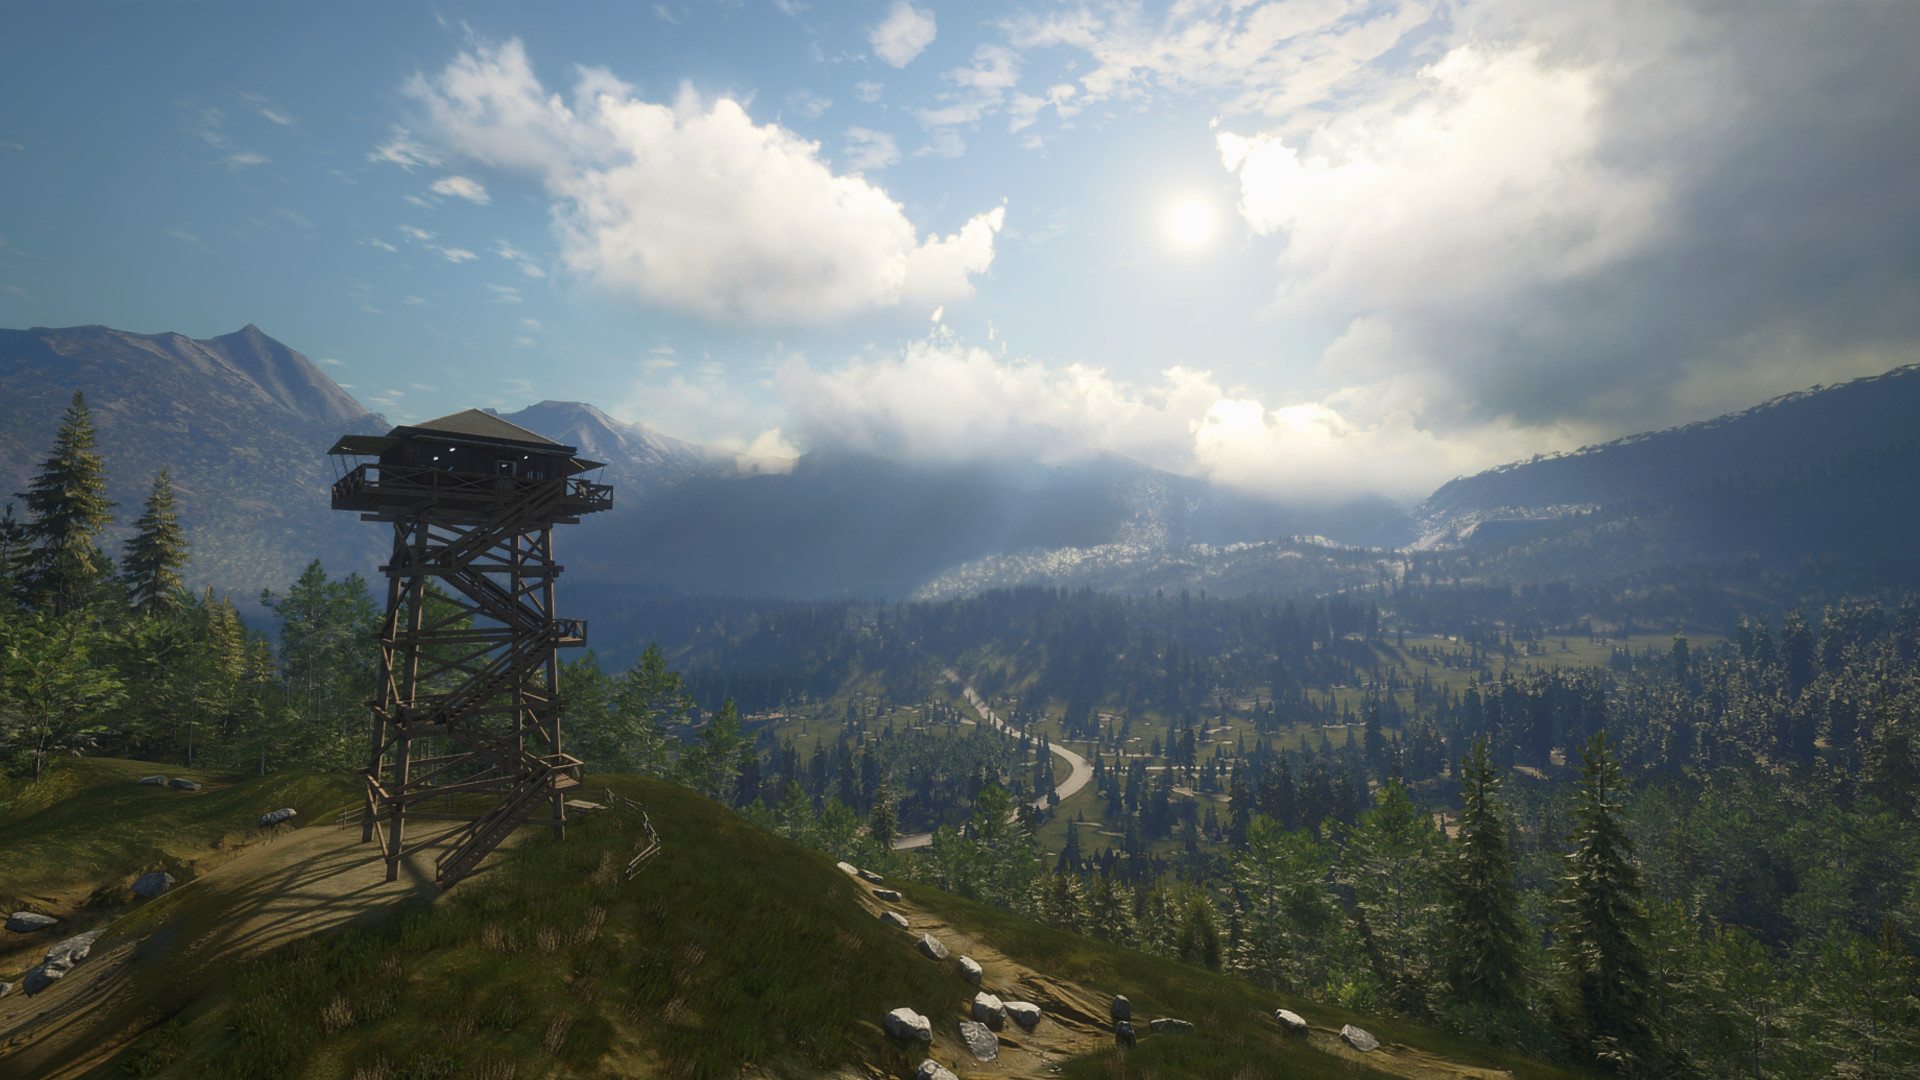 theHunter: Call of the Wild™ - Silver Ridge Peaks on Steam